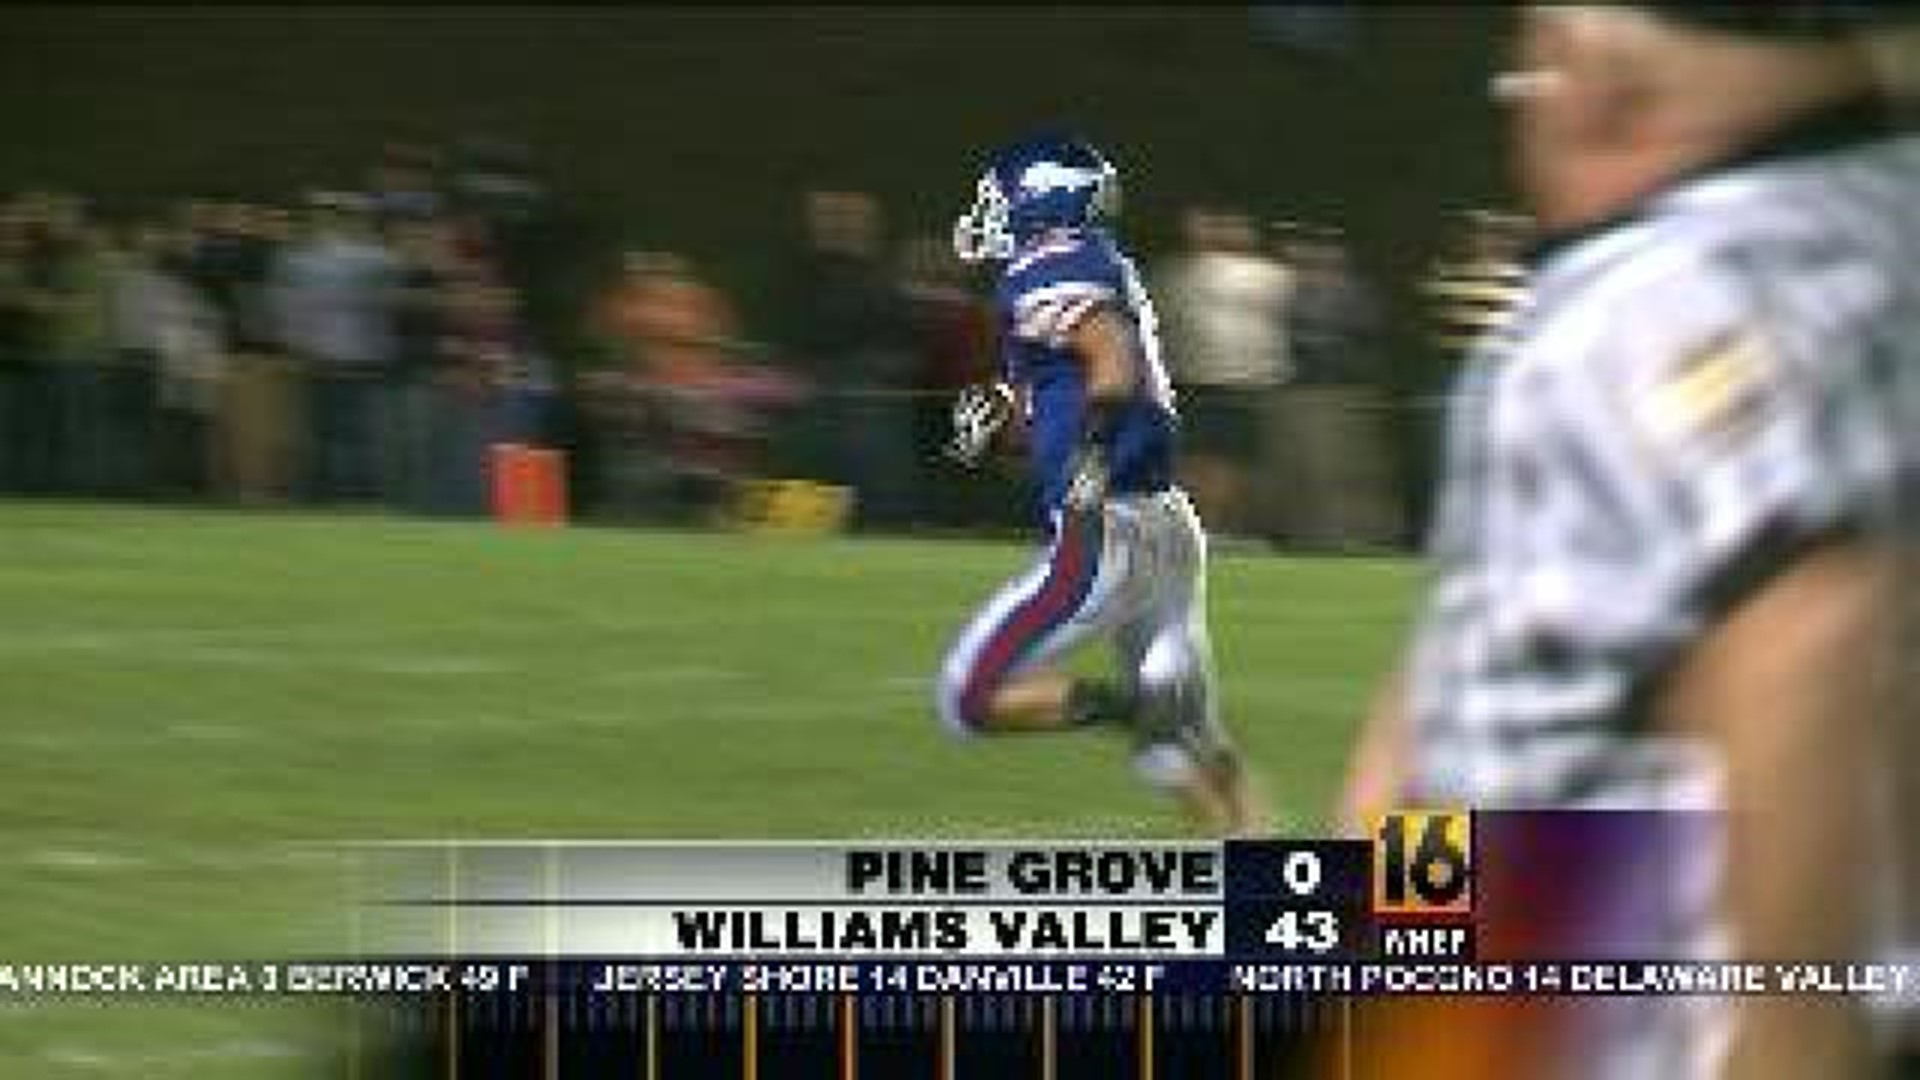 Pine Grove vs. Williams Valley